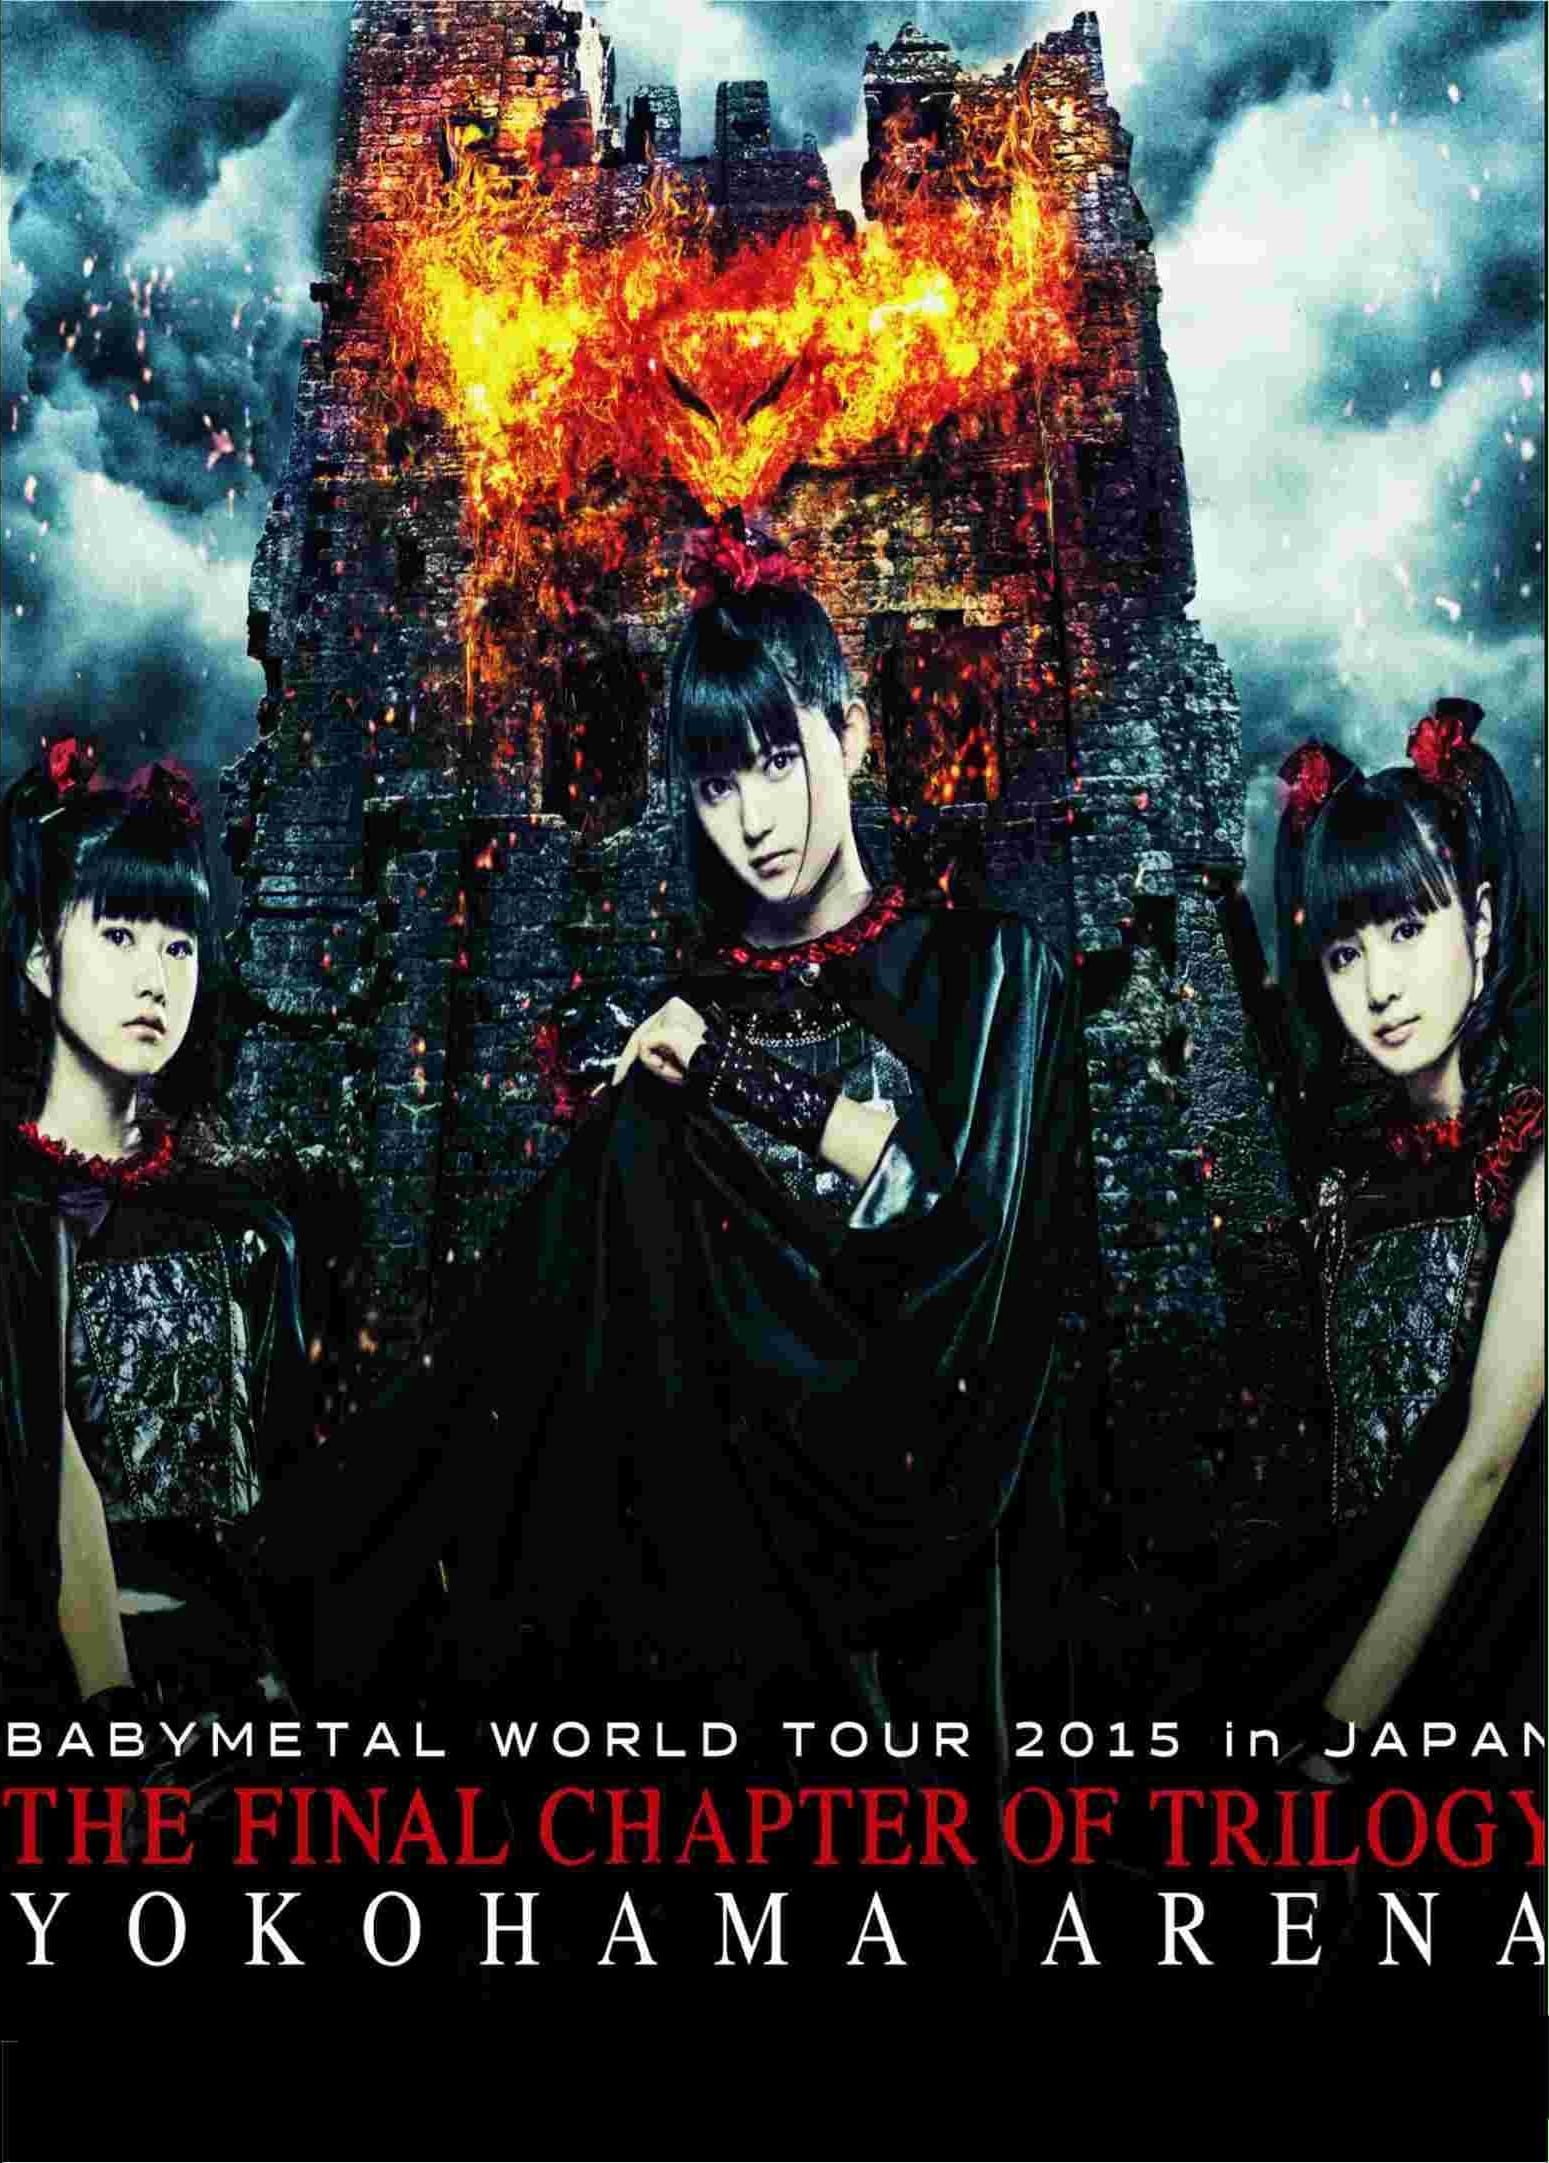 Babymetal - Live at Yokohama: World Tour 2015 - The Final Chapter of Trilogy